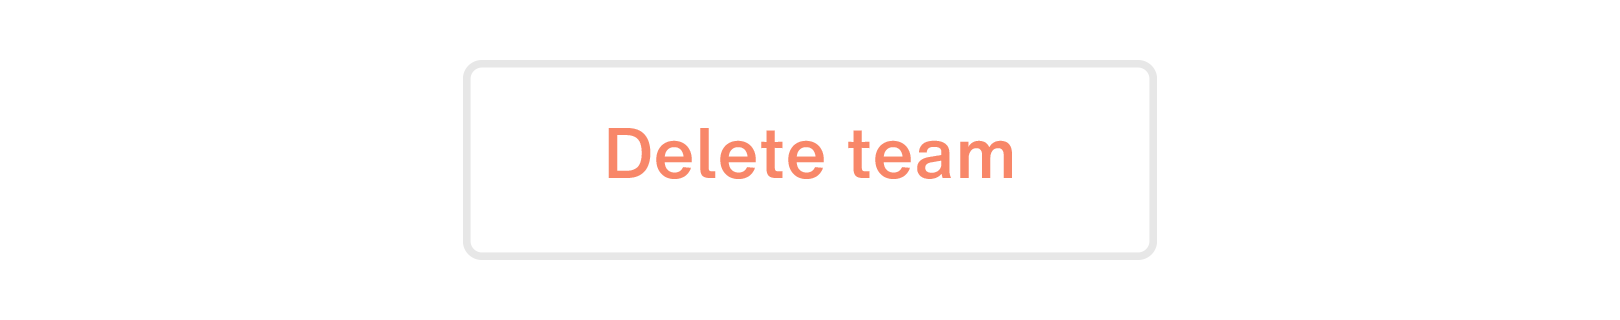 Delete team_01